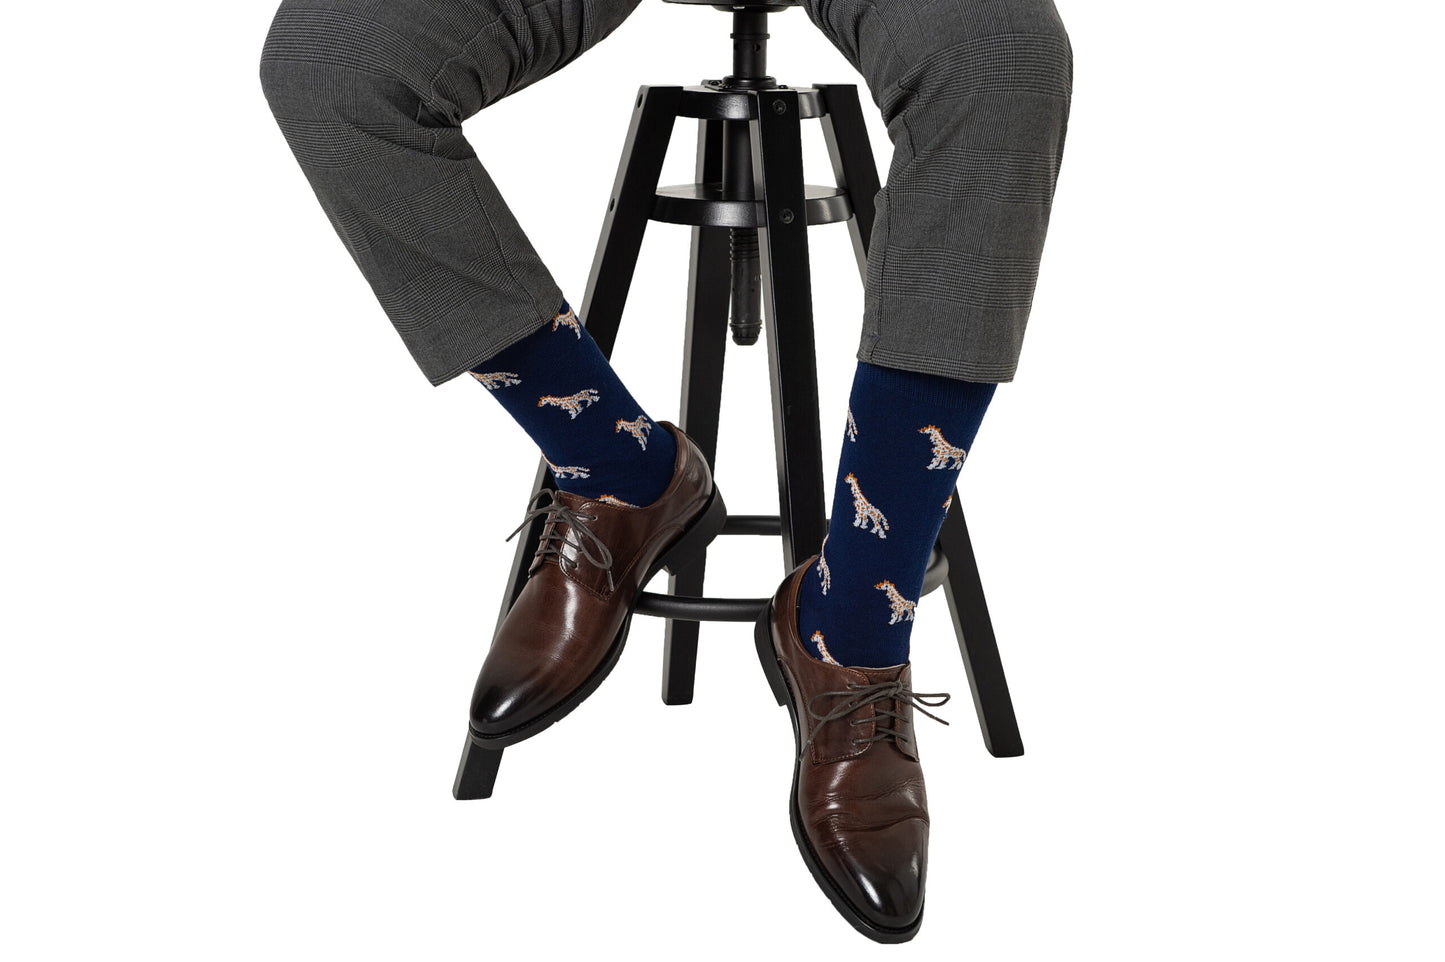 A man sitting on a stool wearing Giraffe Socks.